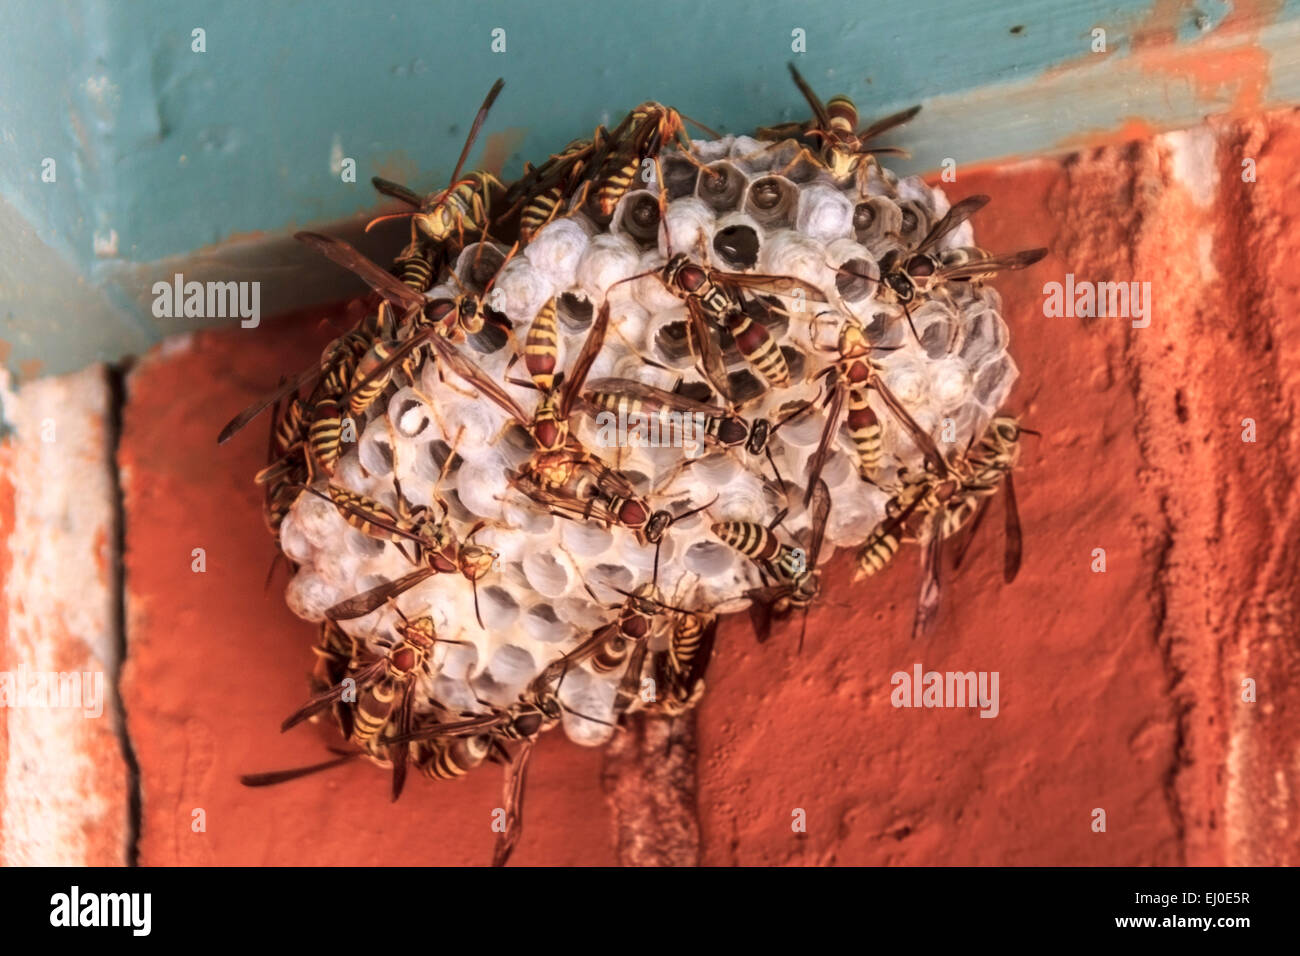 insect, nest, Richardson, Texas, TX, United States, USA, America, Vespula germanica, wasp Stock Photo